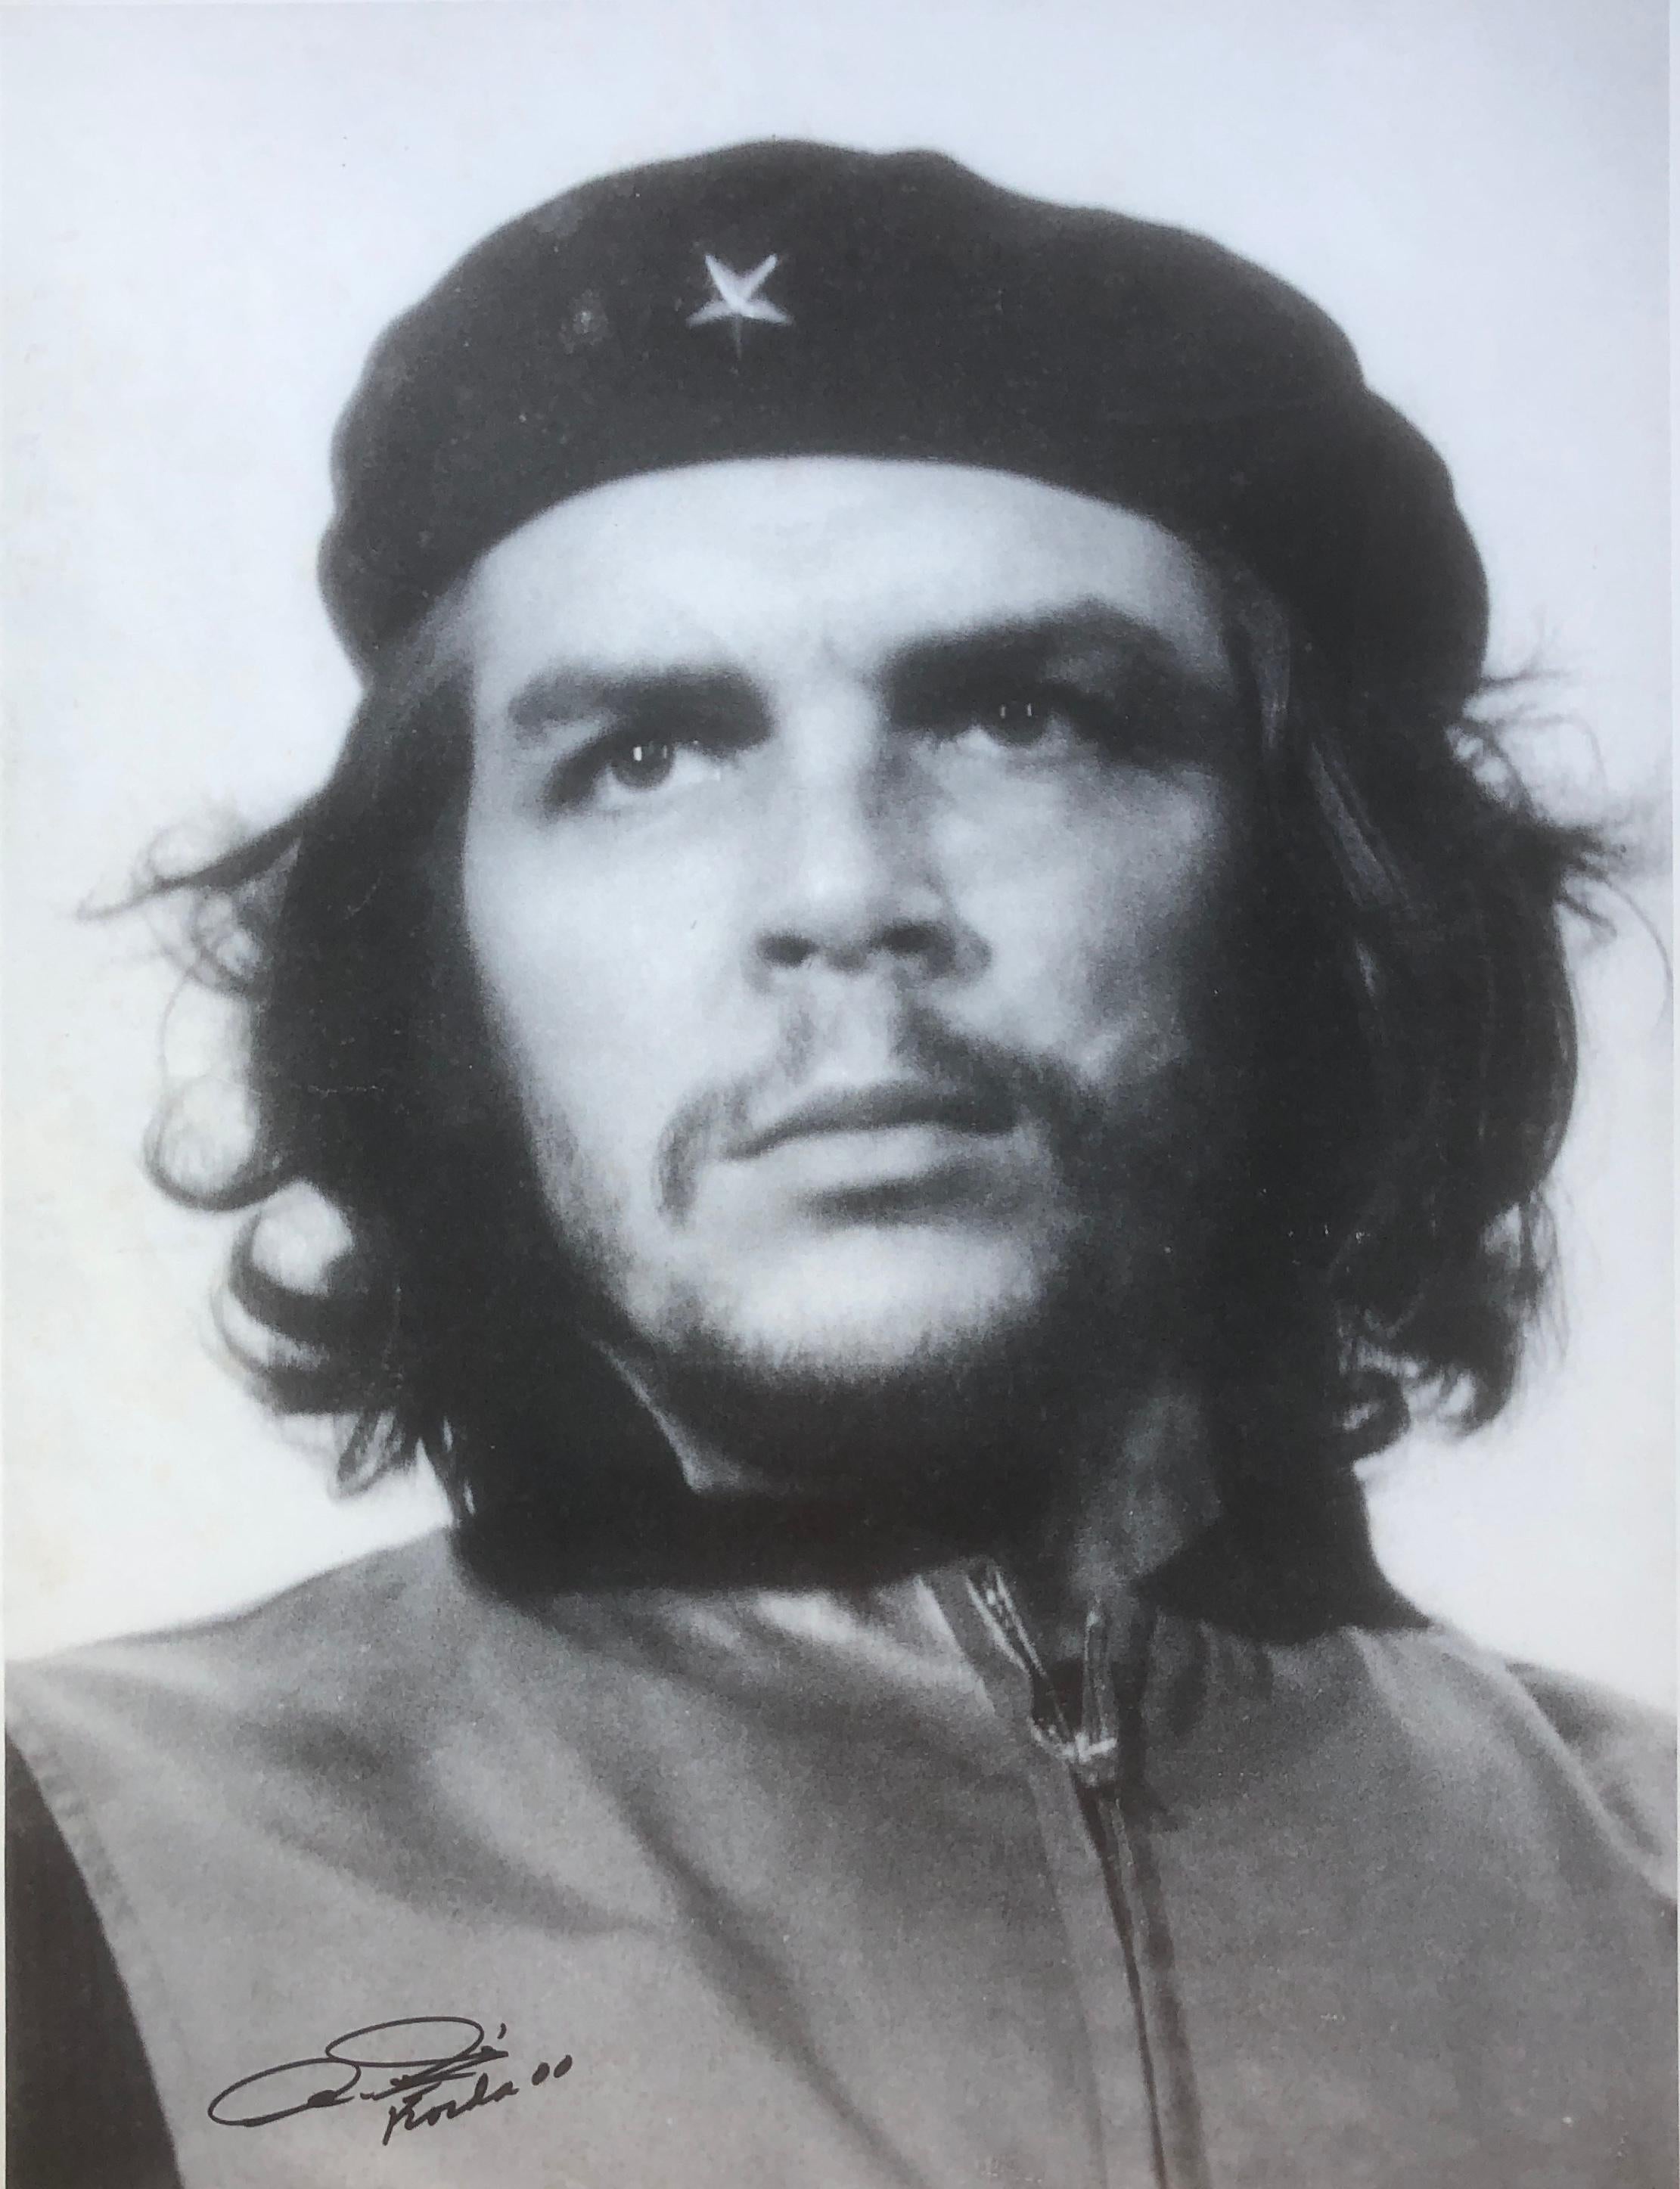 Alberto Korda Portrait Photograph - Guerillero Heroico Che Guevara hand signed photograph certified